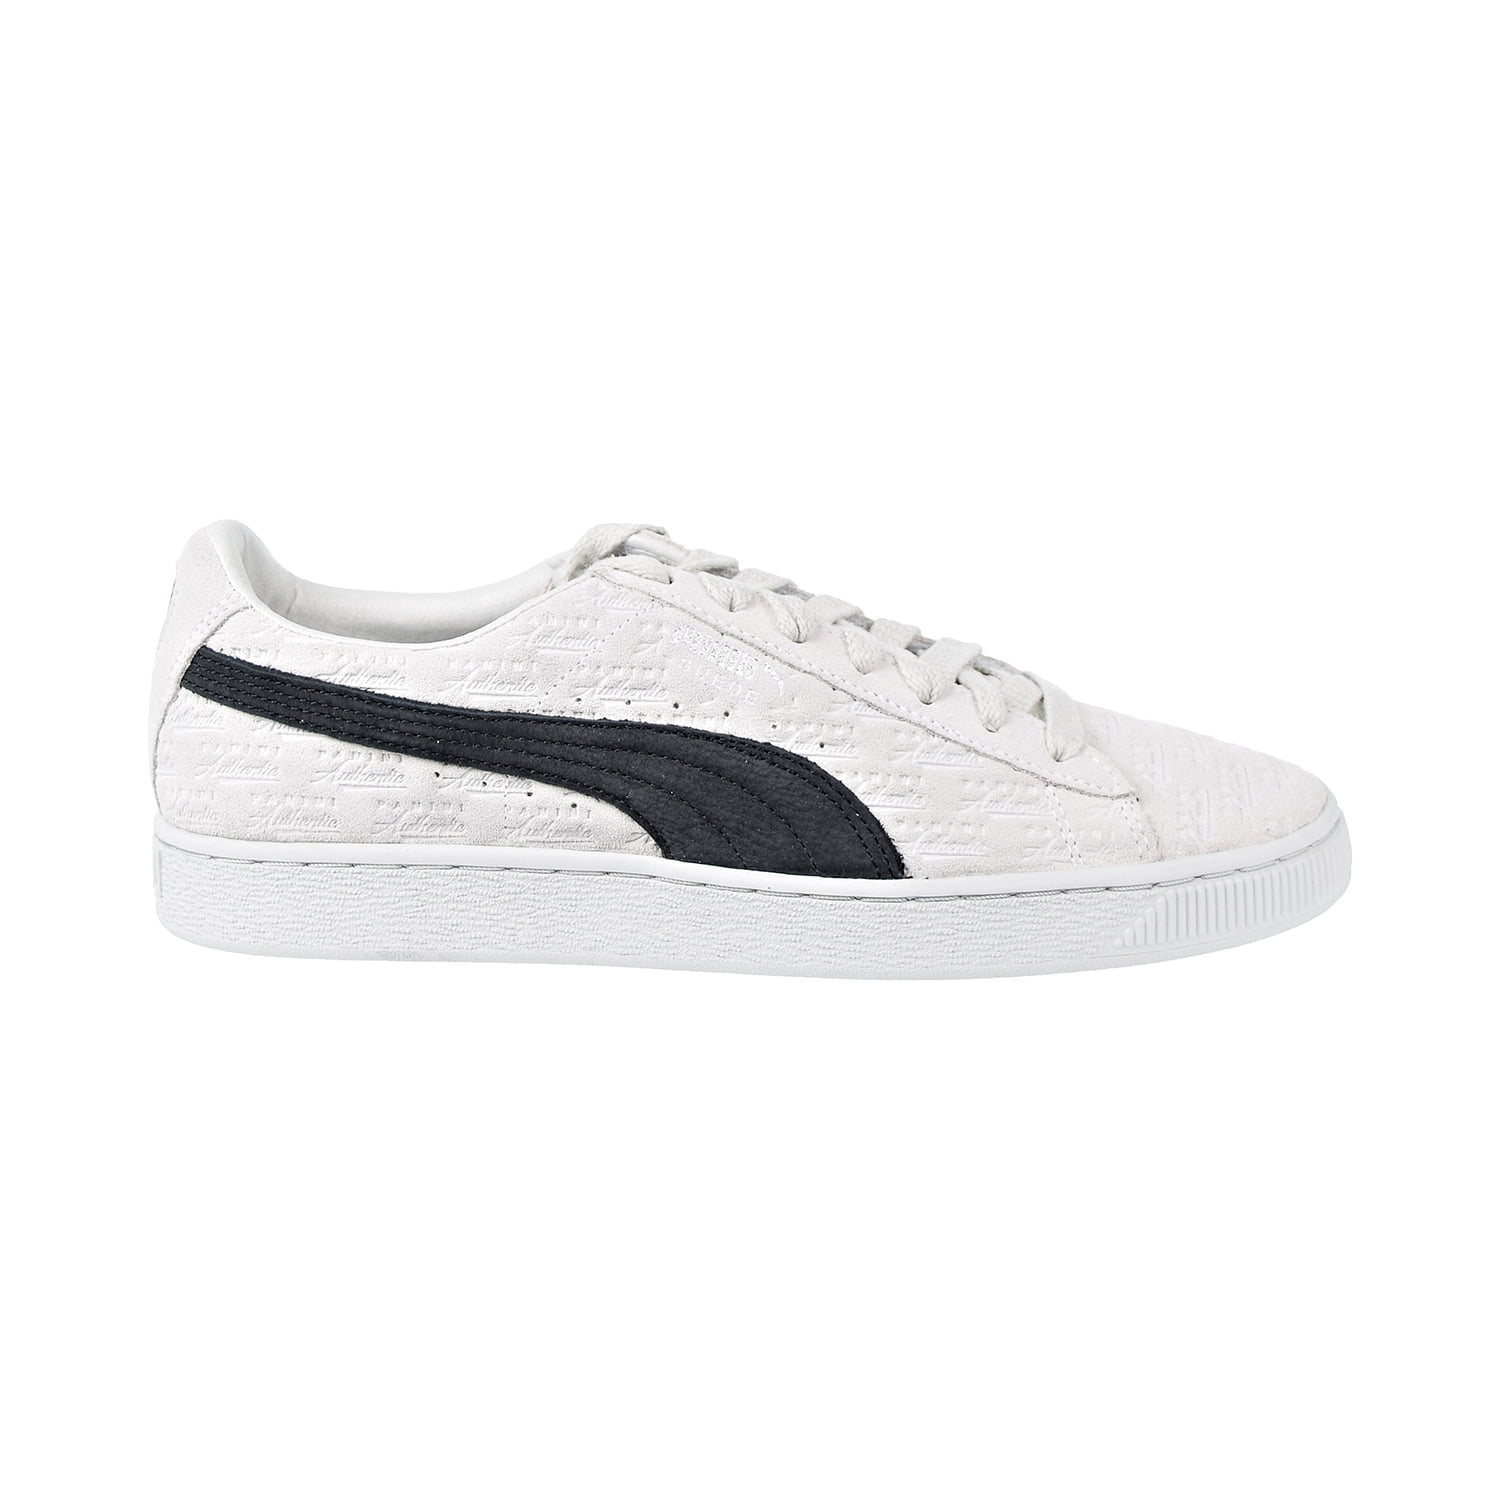 Puma Suede Classic x PANINI Men's Shoes White/Black 366323-01 - Walmart.com